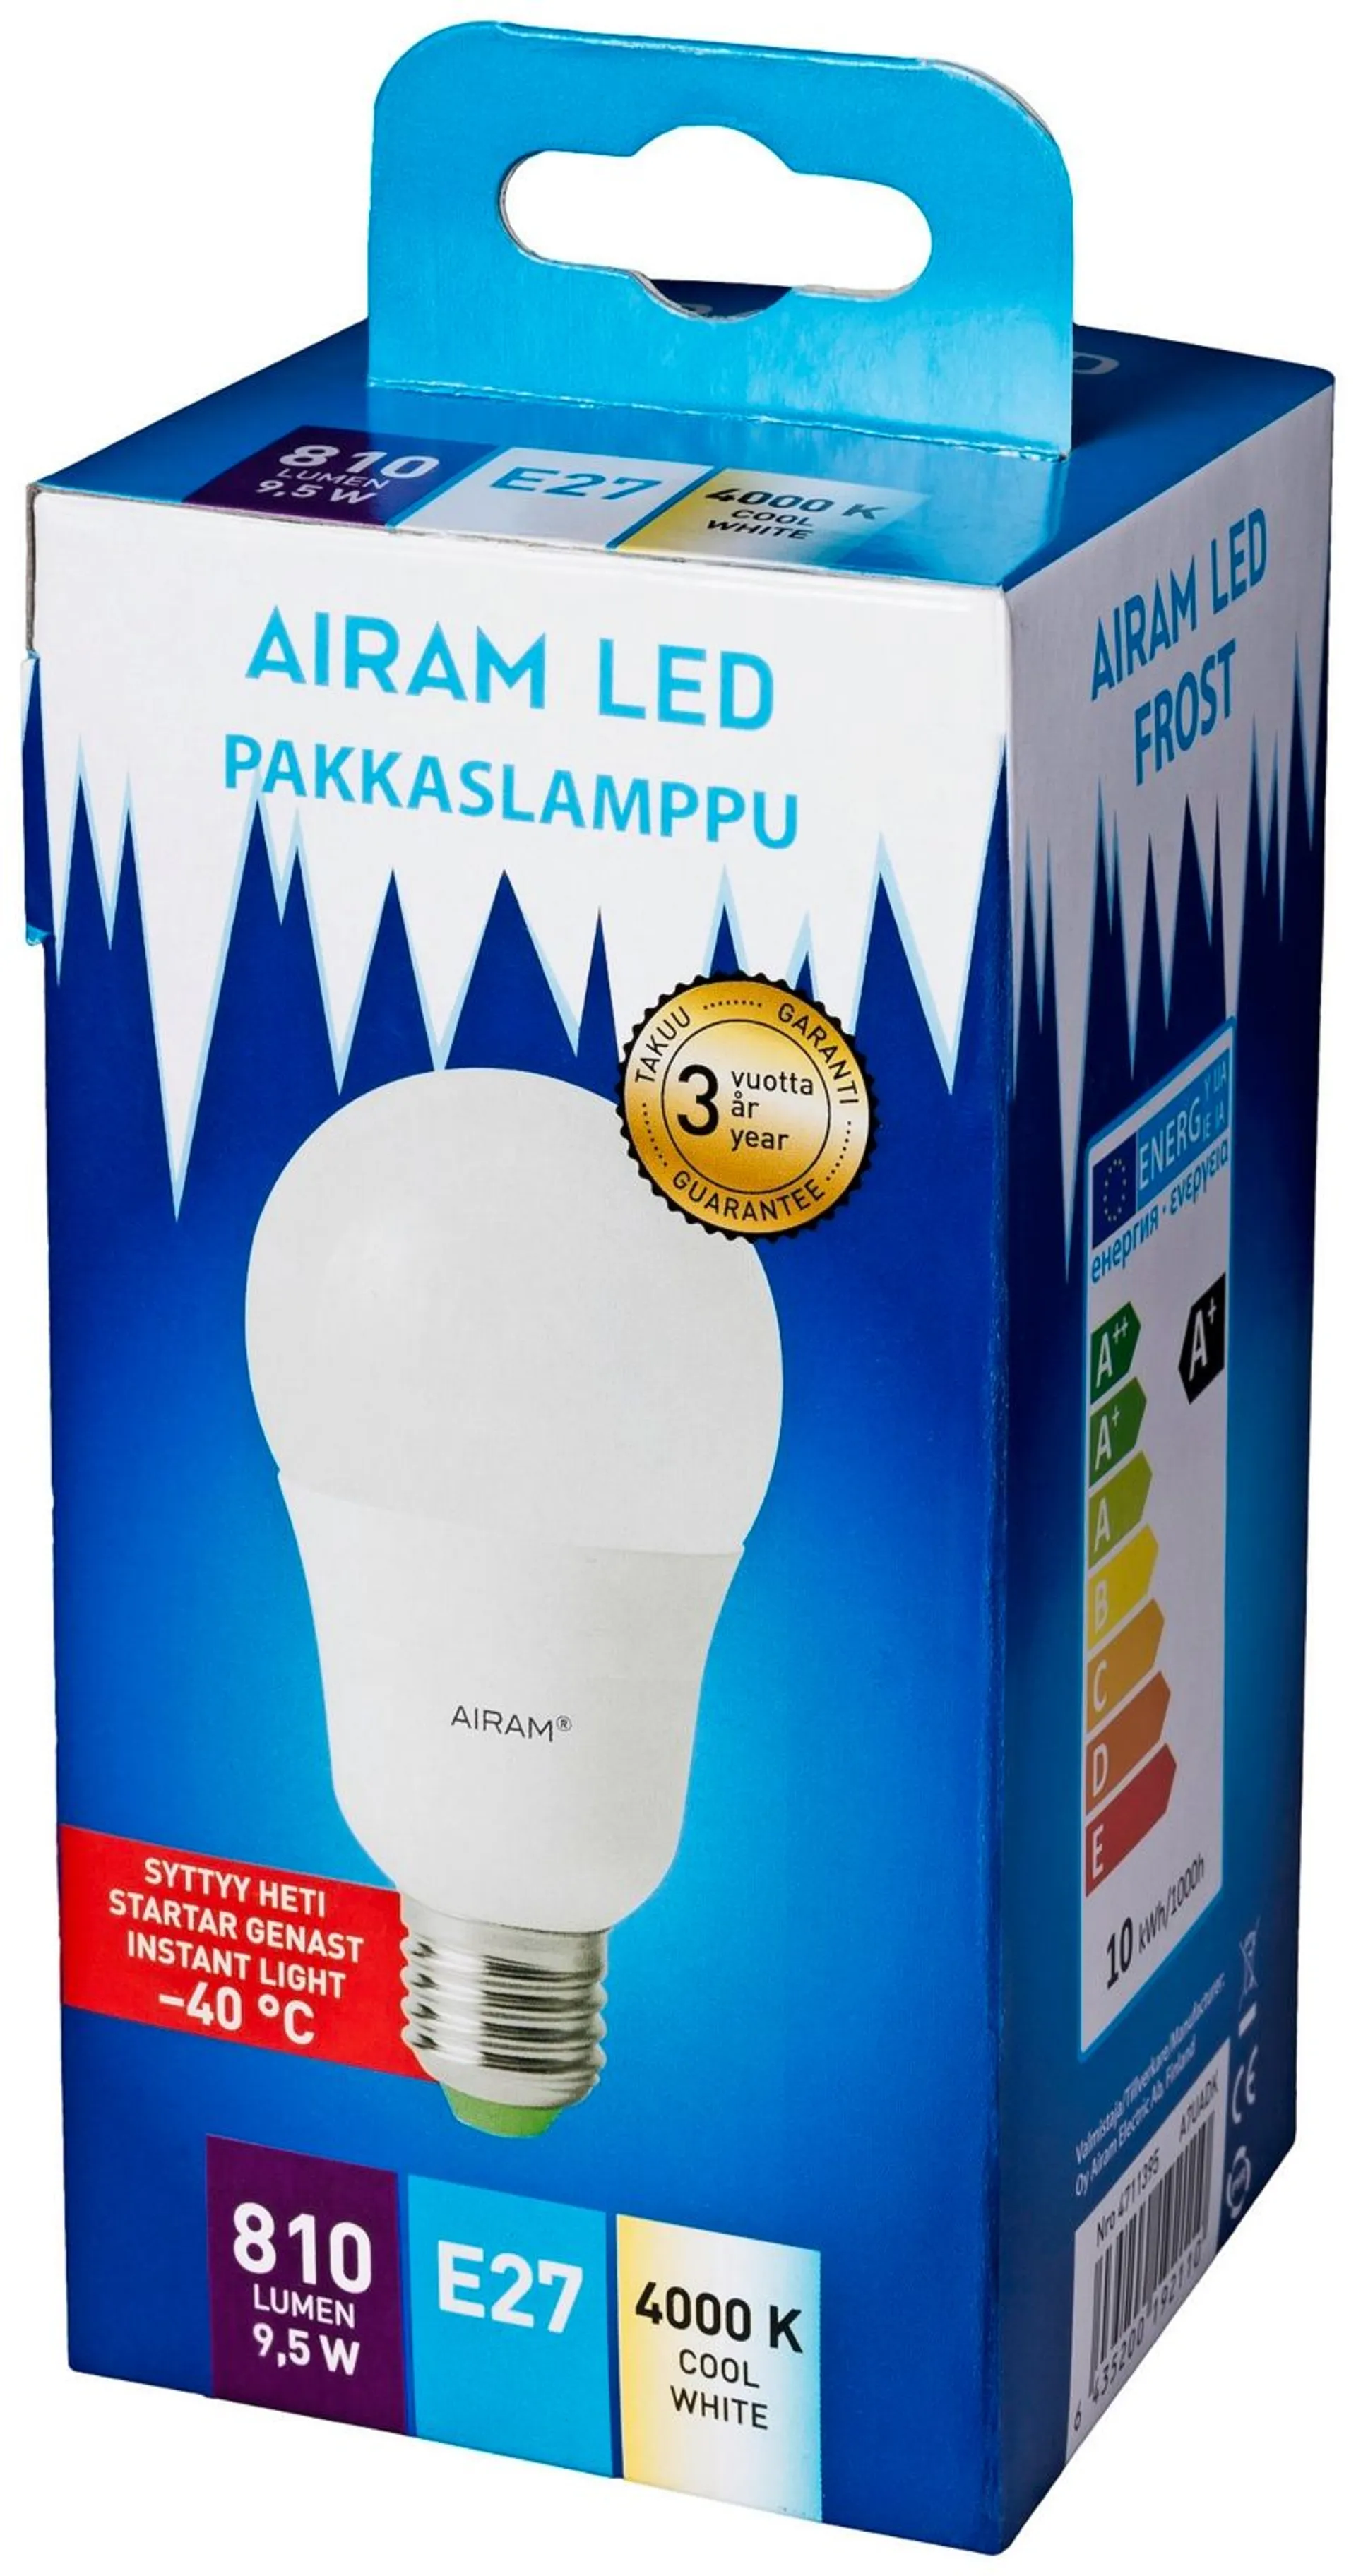 Airam LED pakkaslamppu 8,5w E27 - 2